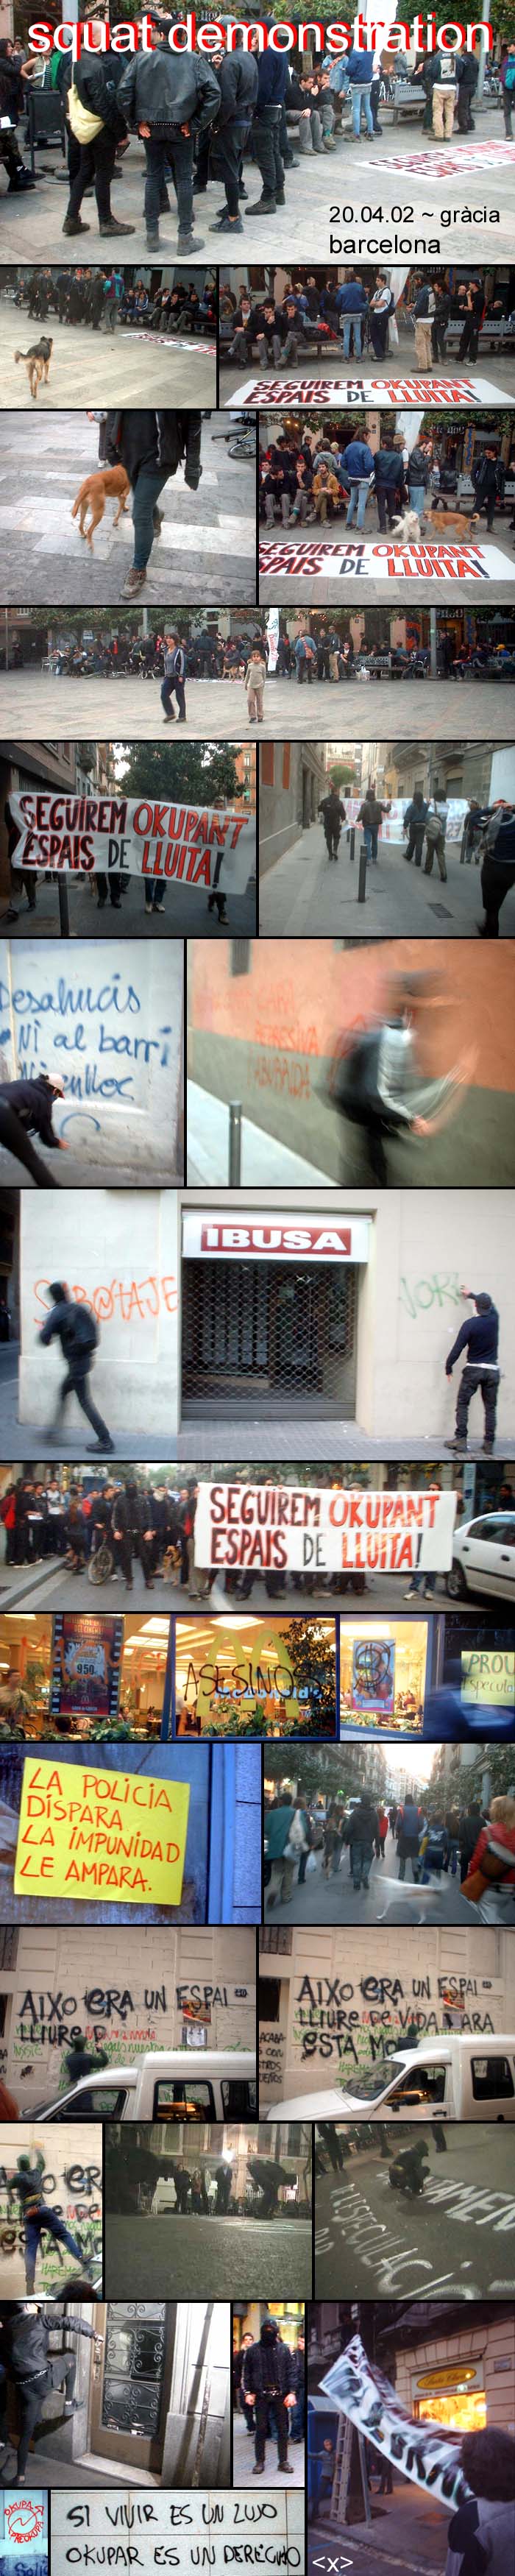 squat demonstration .. barcelona